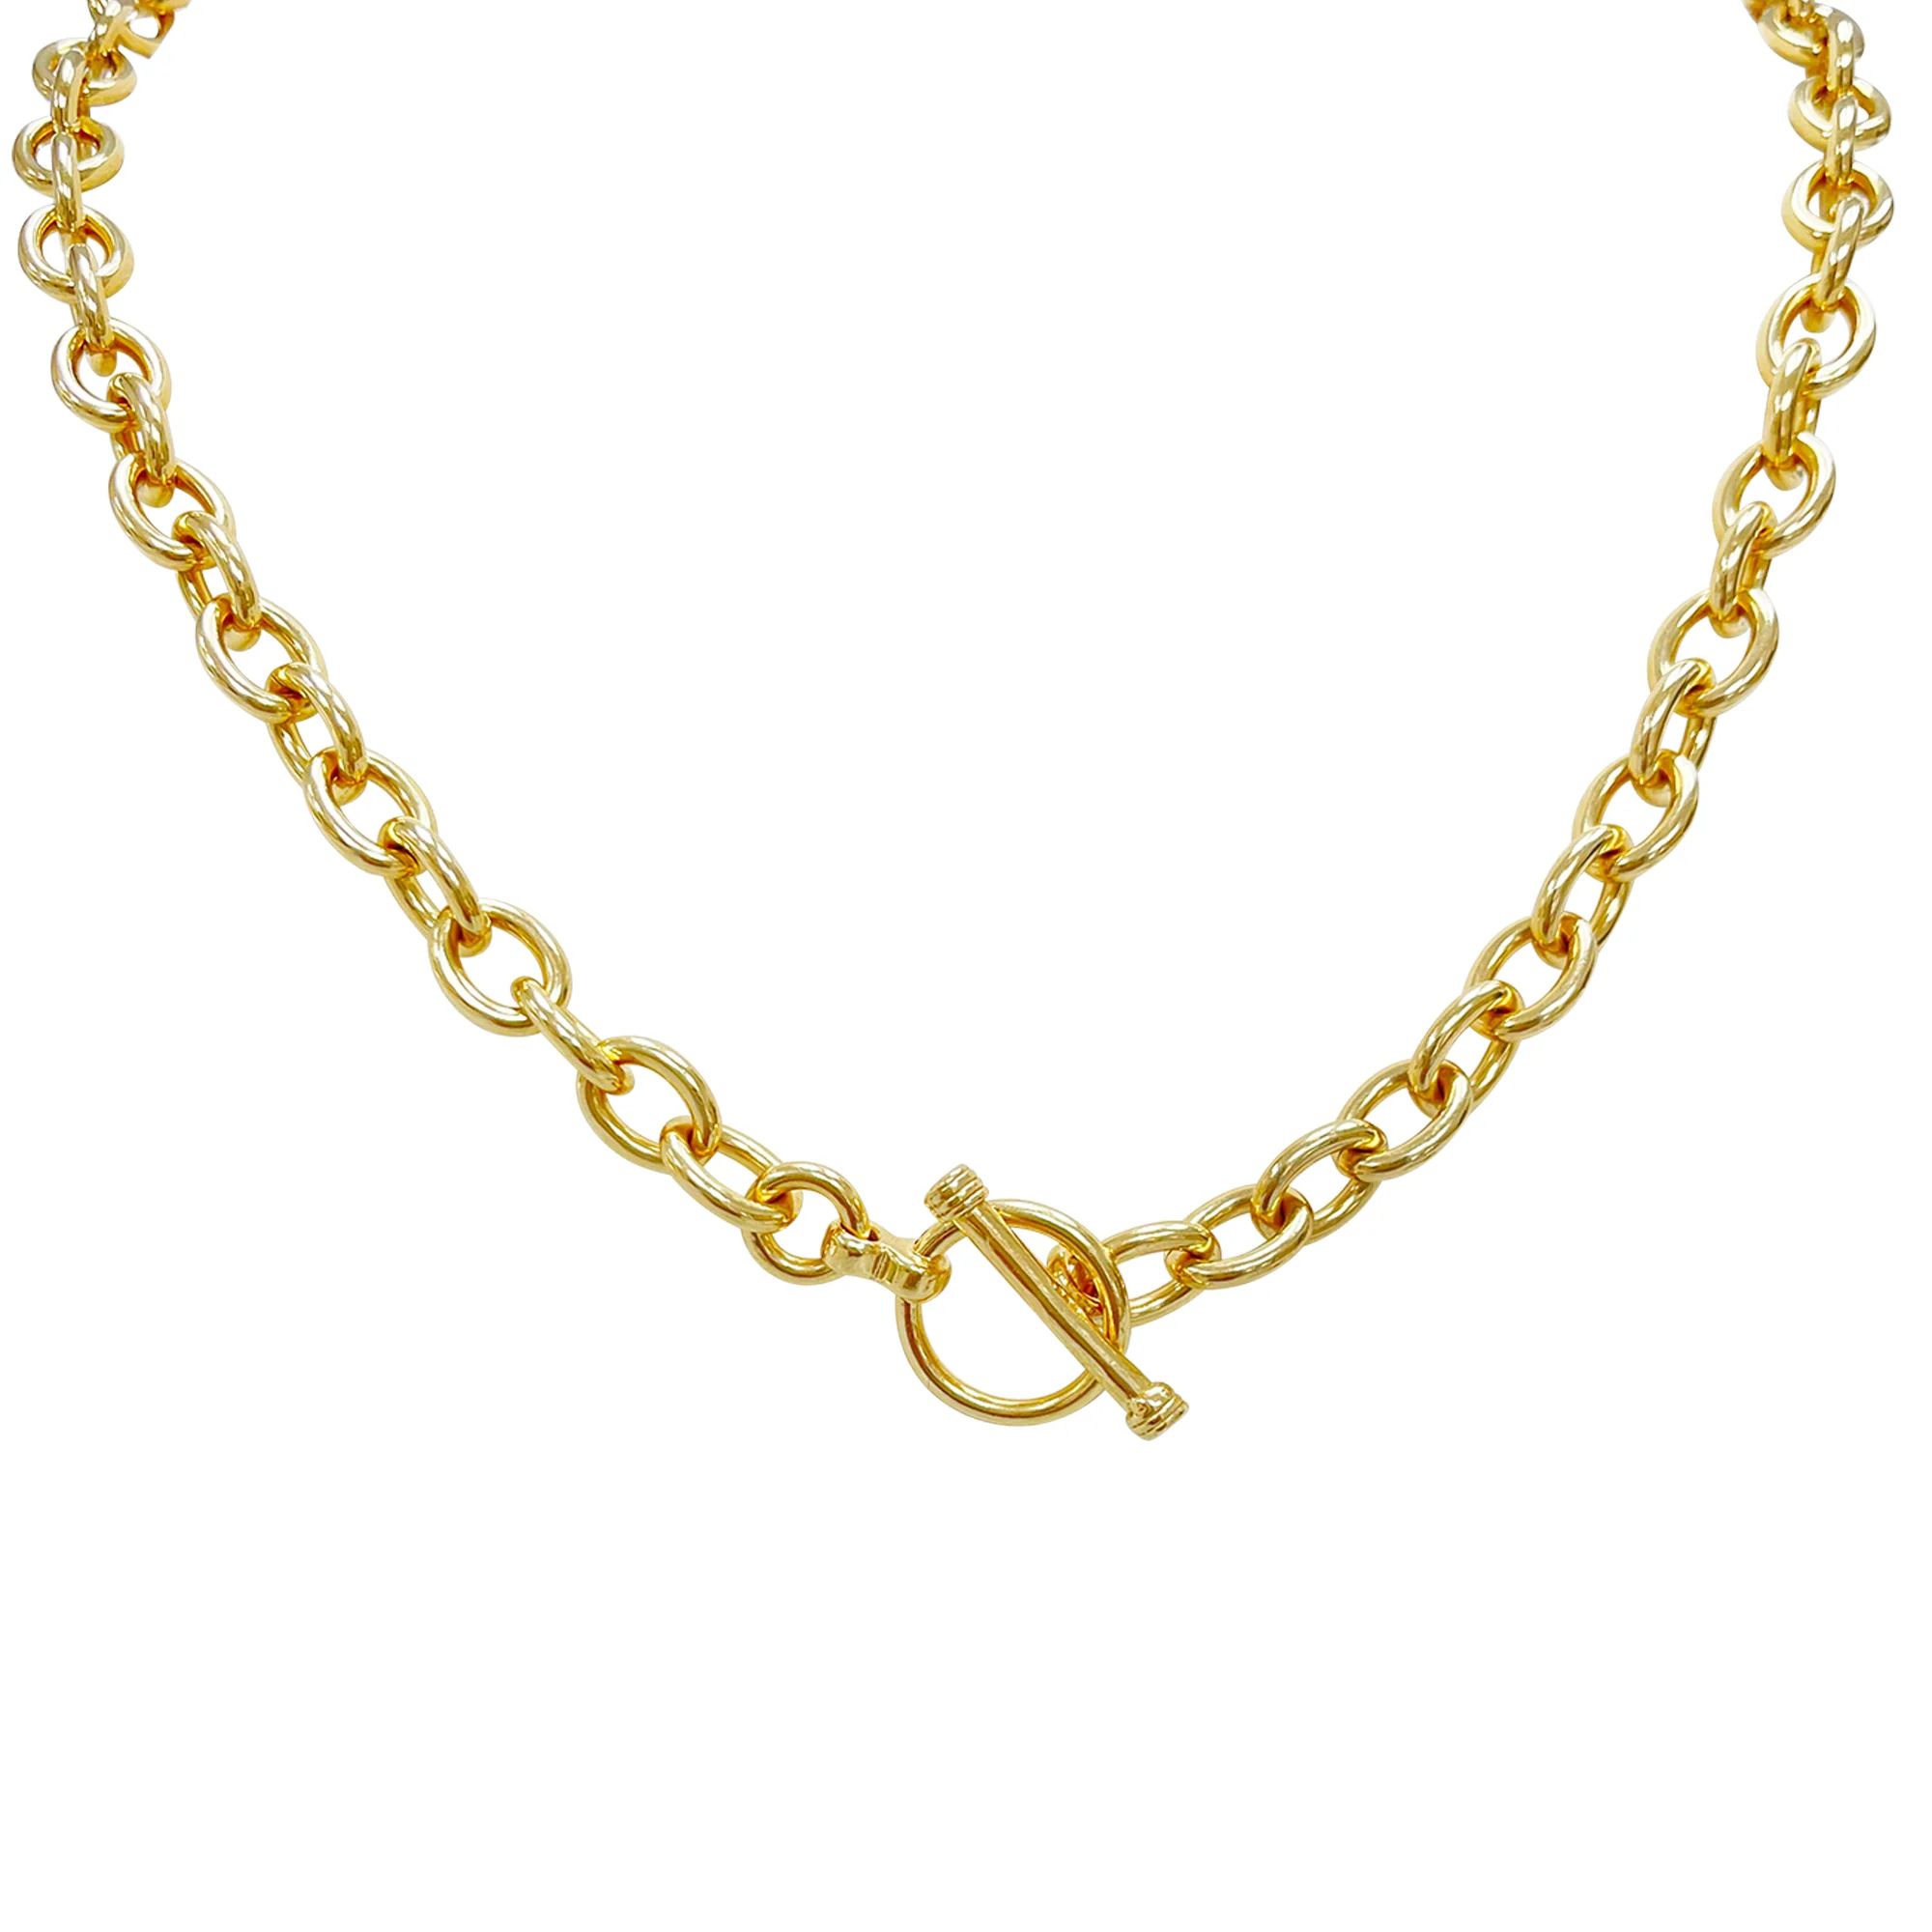 Toggle Me Up Gold Toggle Necklace Chain | La Soula Jules